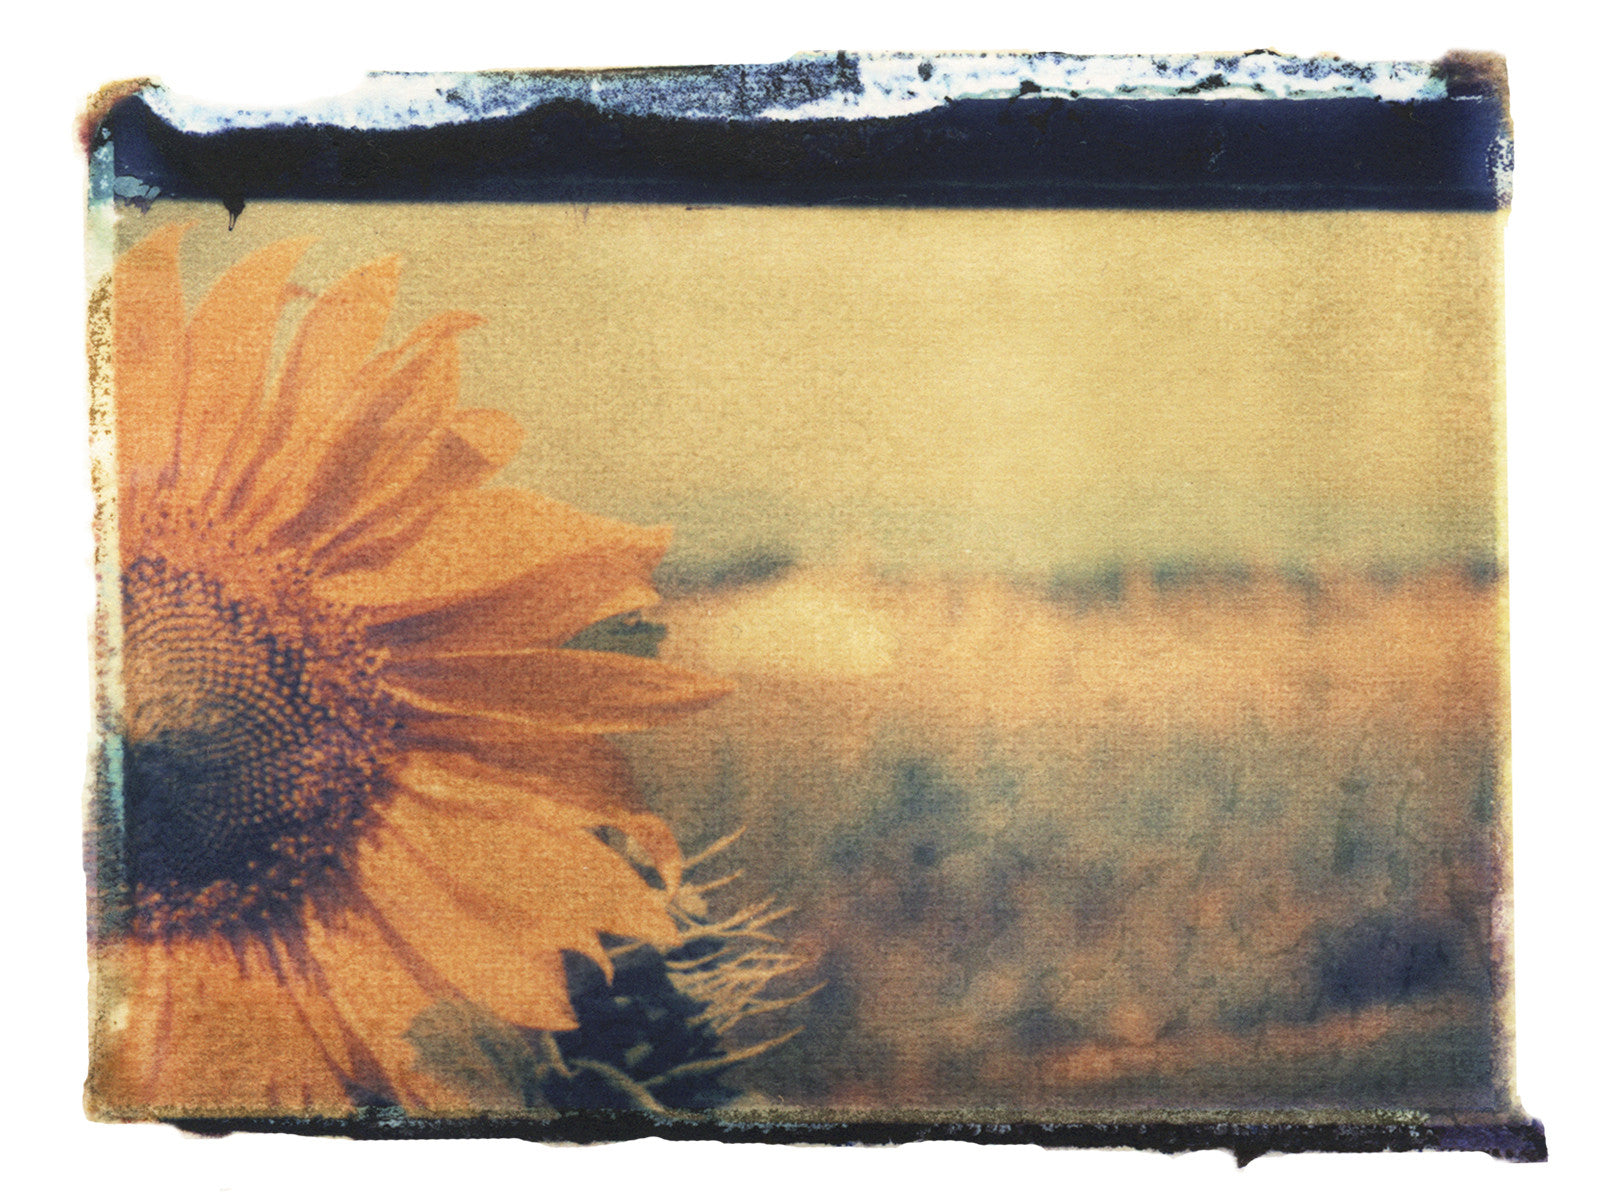 Sunflower On Film - She Hit Pause